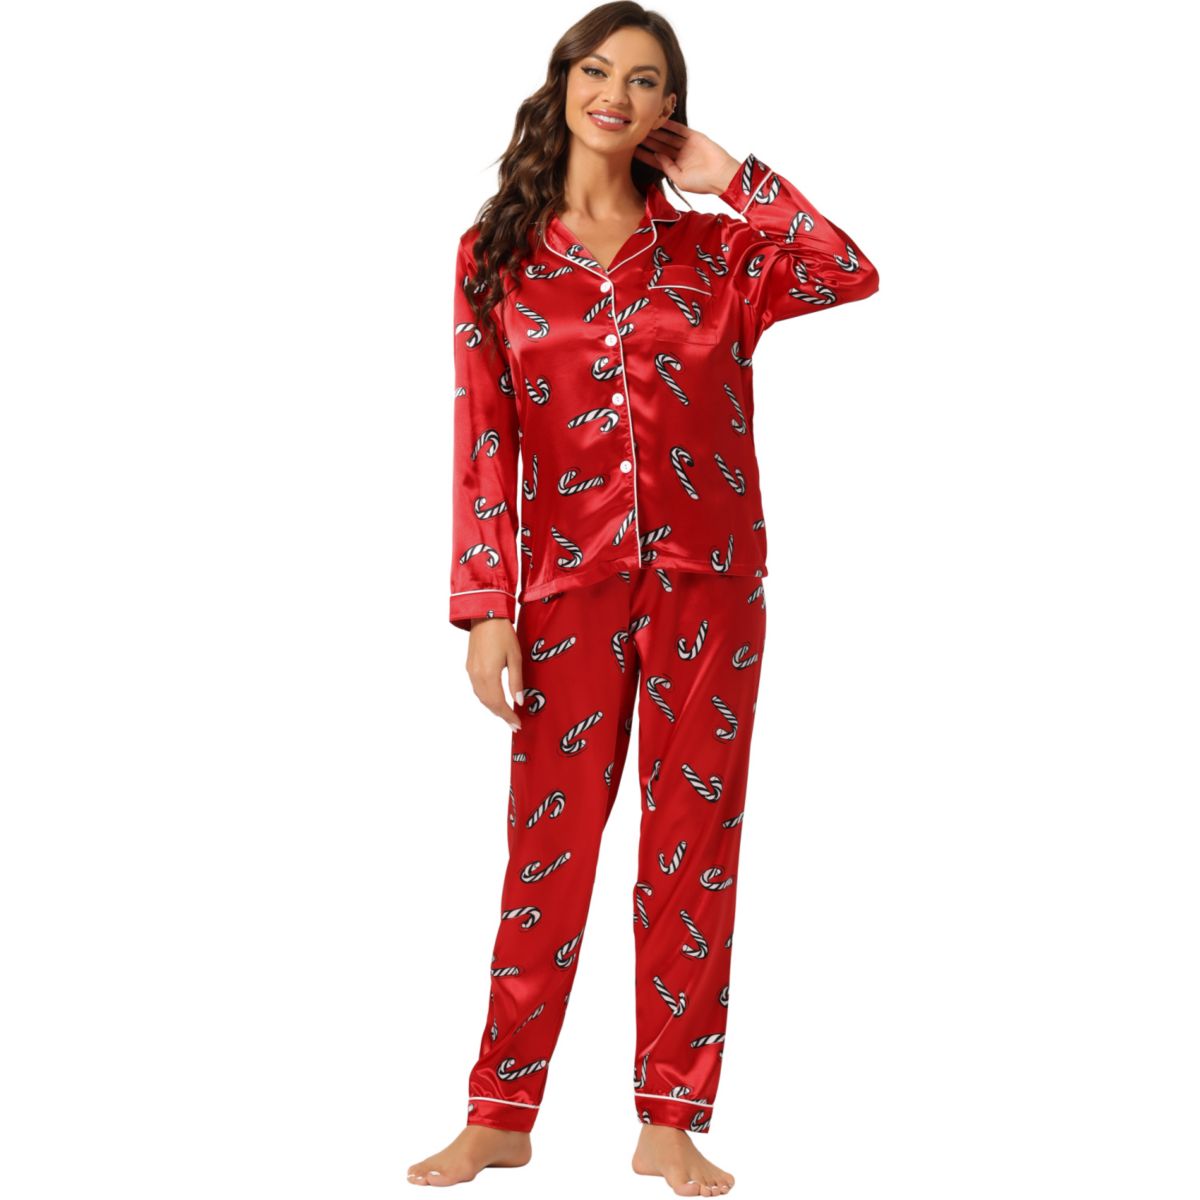 Women's Pajama Sleep Shirt Nightwear Sleepwear Lounge Satin Pj Sets Cheibear